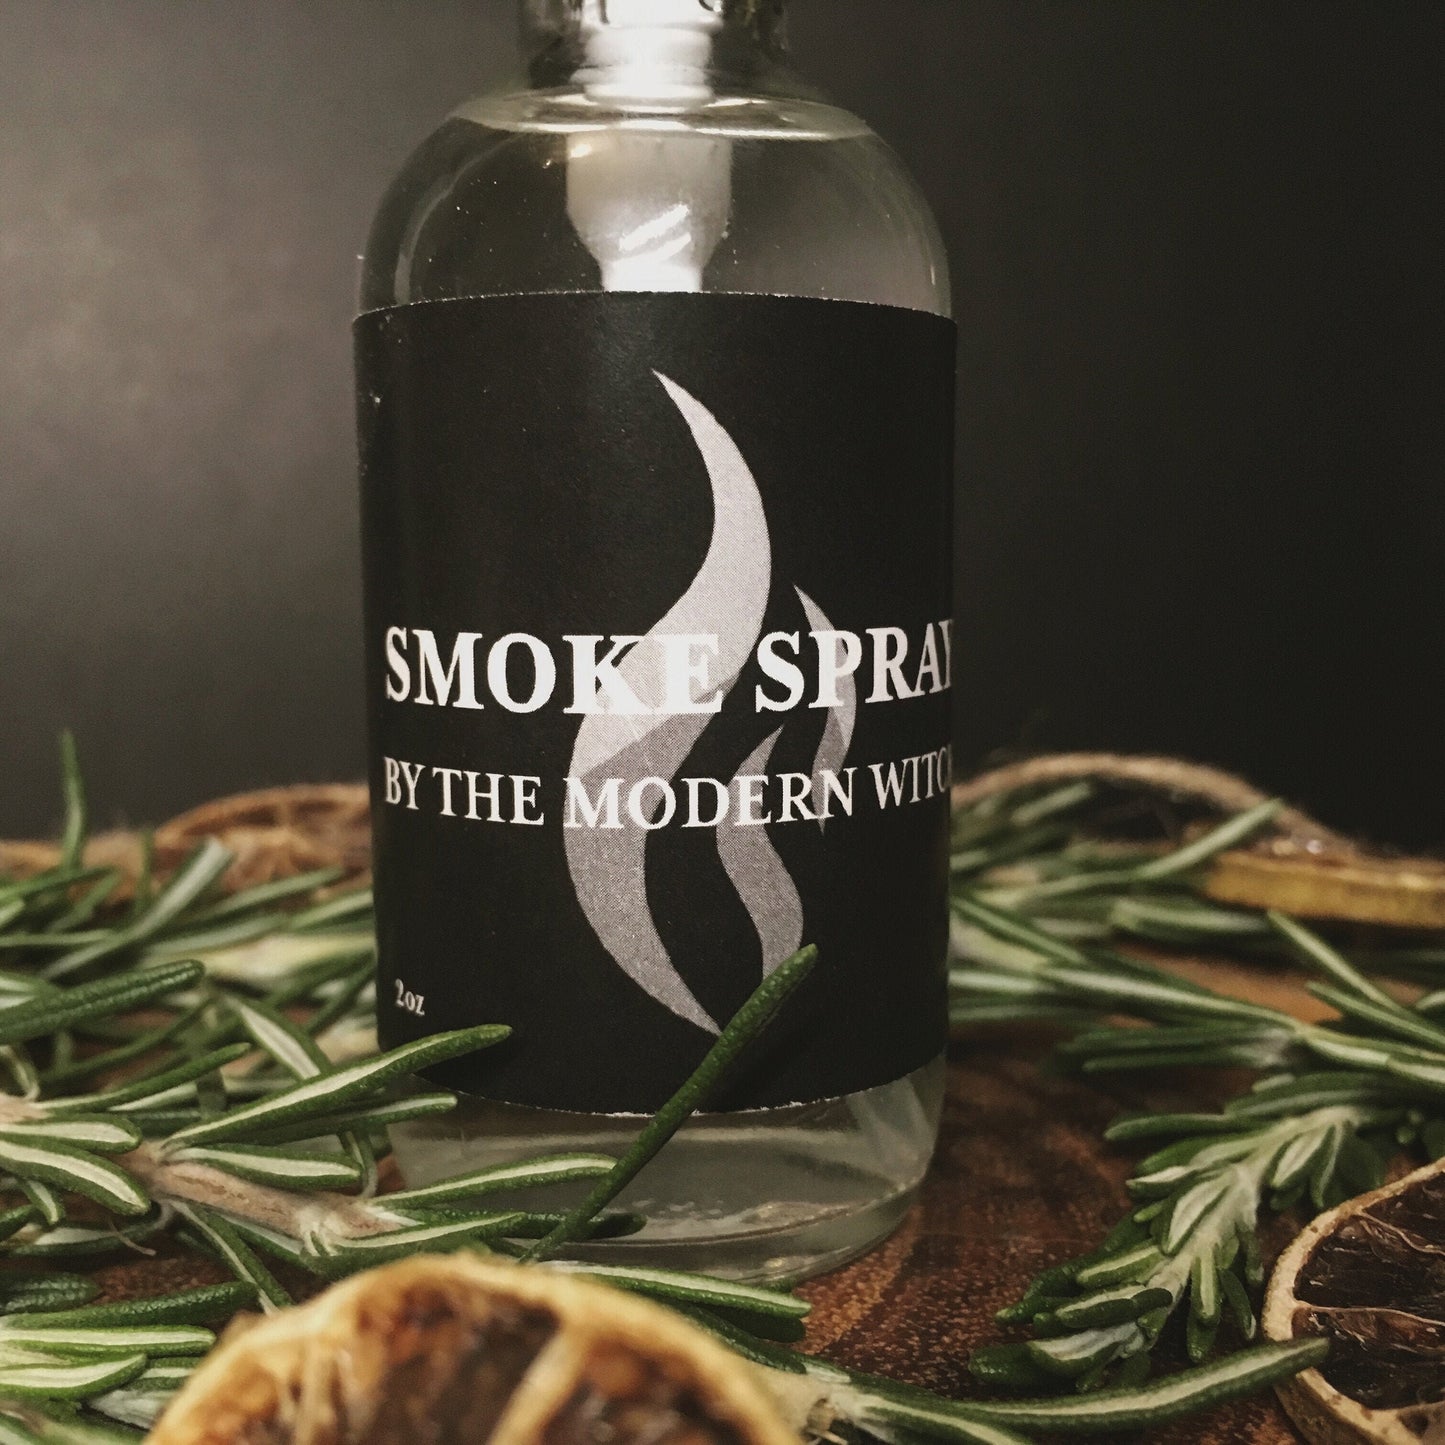 Smoke Spray (2oz) | Cedar Leaf, Rosemary & Lemongrass | Smoke Cleansing Alternative | Non-toxic + Pet-friendly